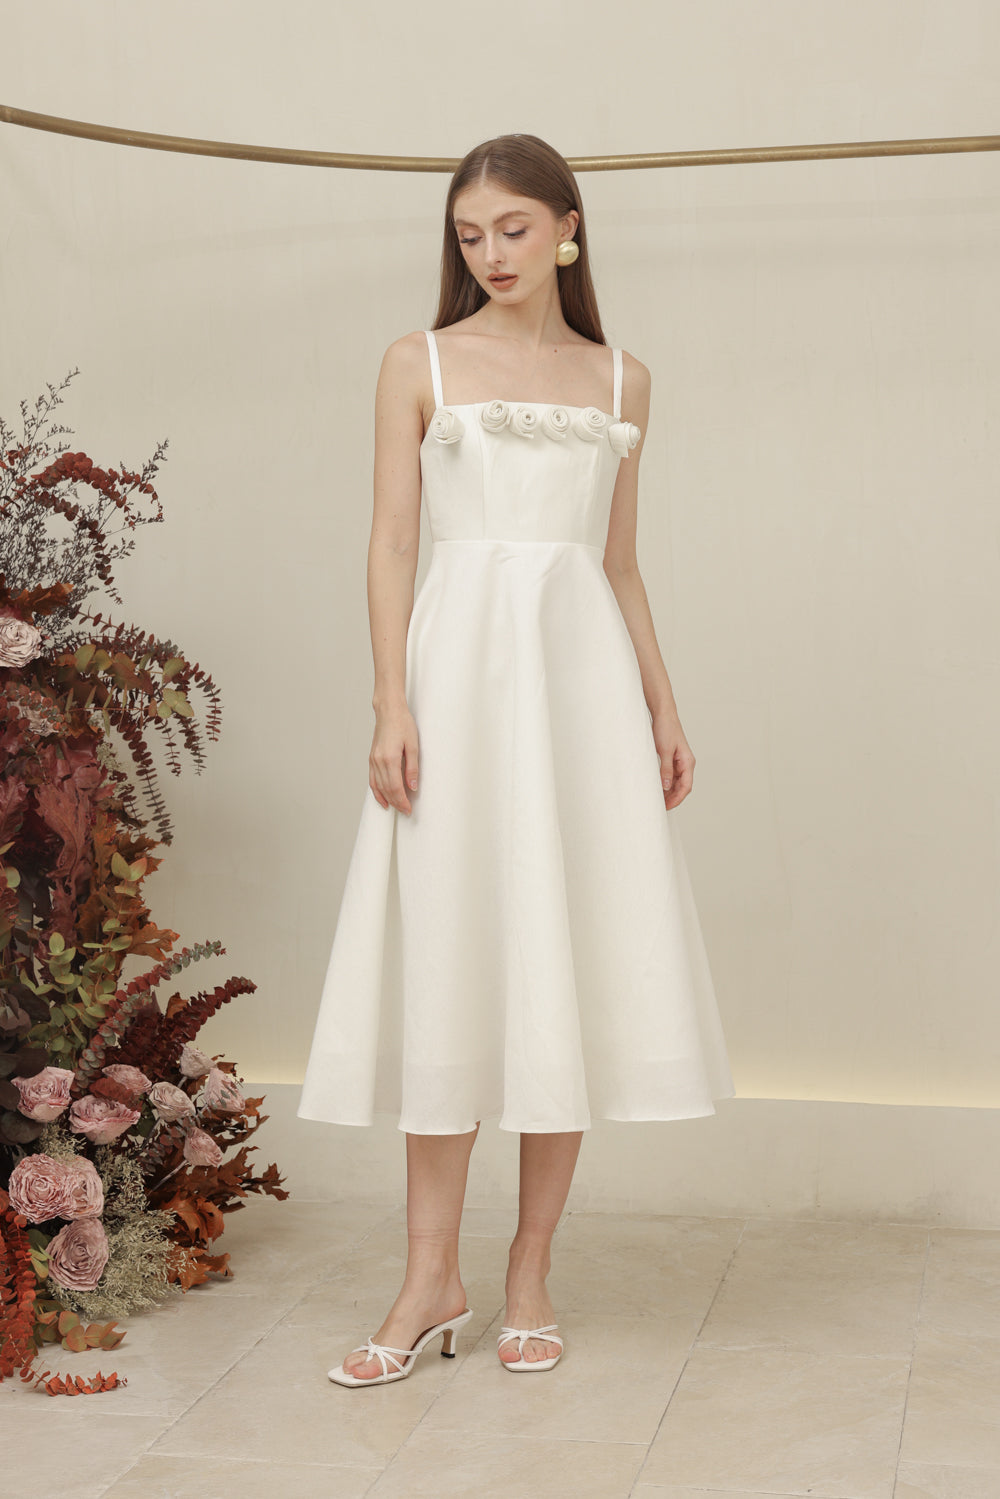 MORGANA DRESS Straight Neckline Strappy Midi Dress with Floral Details (Ivory White Gazaar)